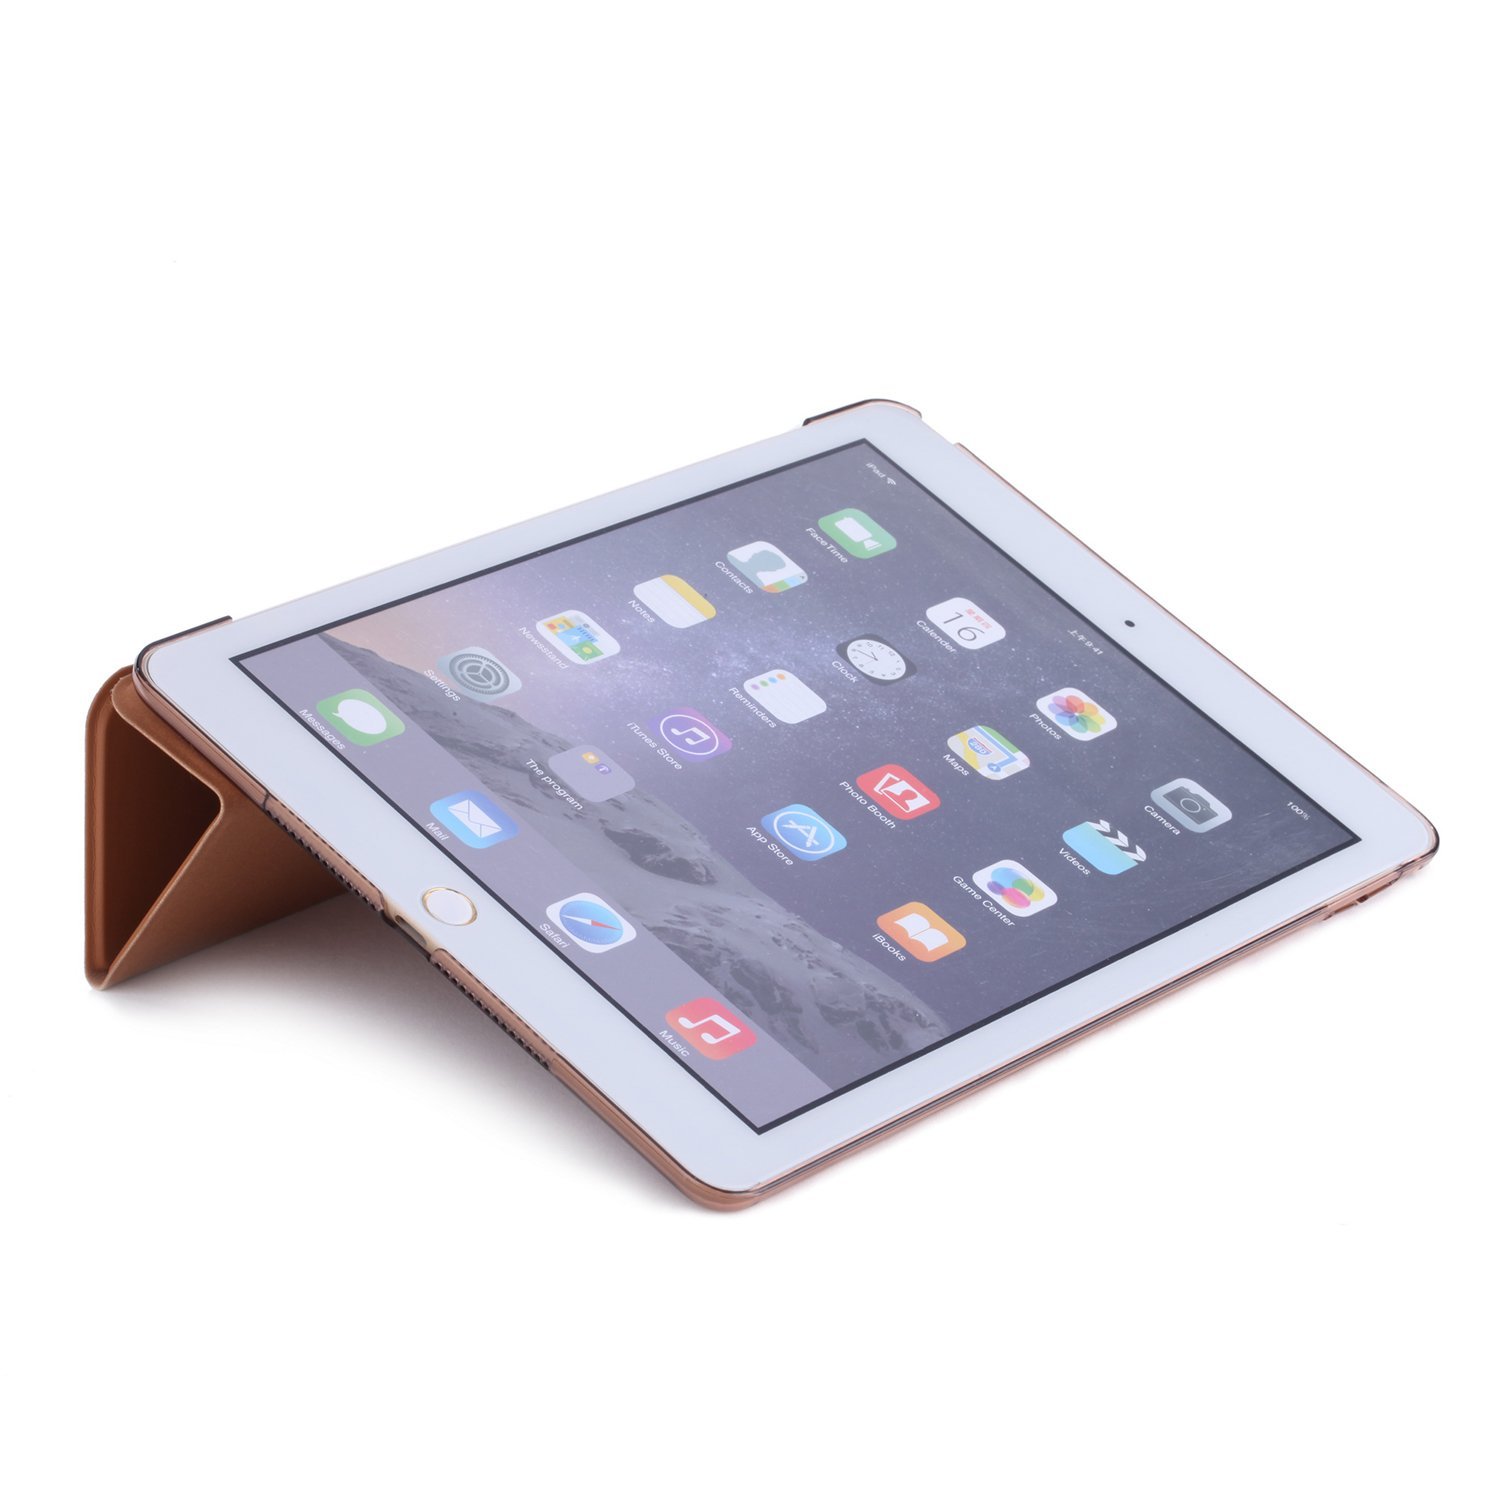 Bao Da Smart Case Gen2 TPU Dành Cho iPad Pro2 9.7inch - Hàng nhập khẩu